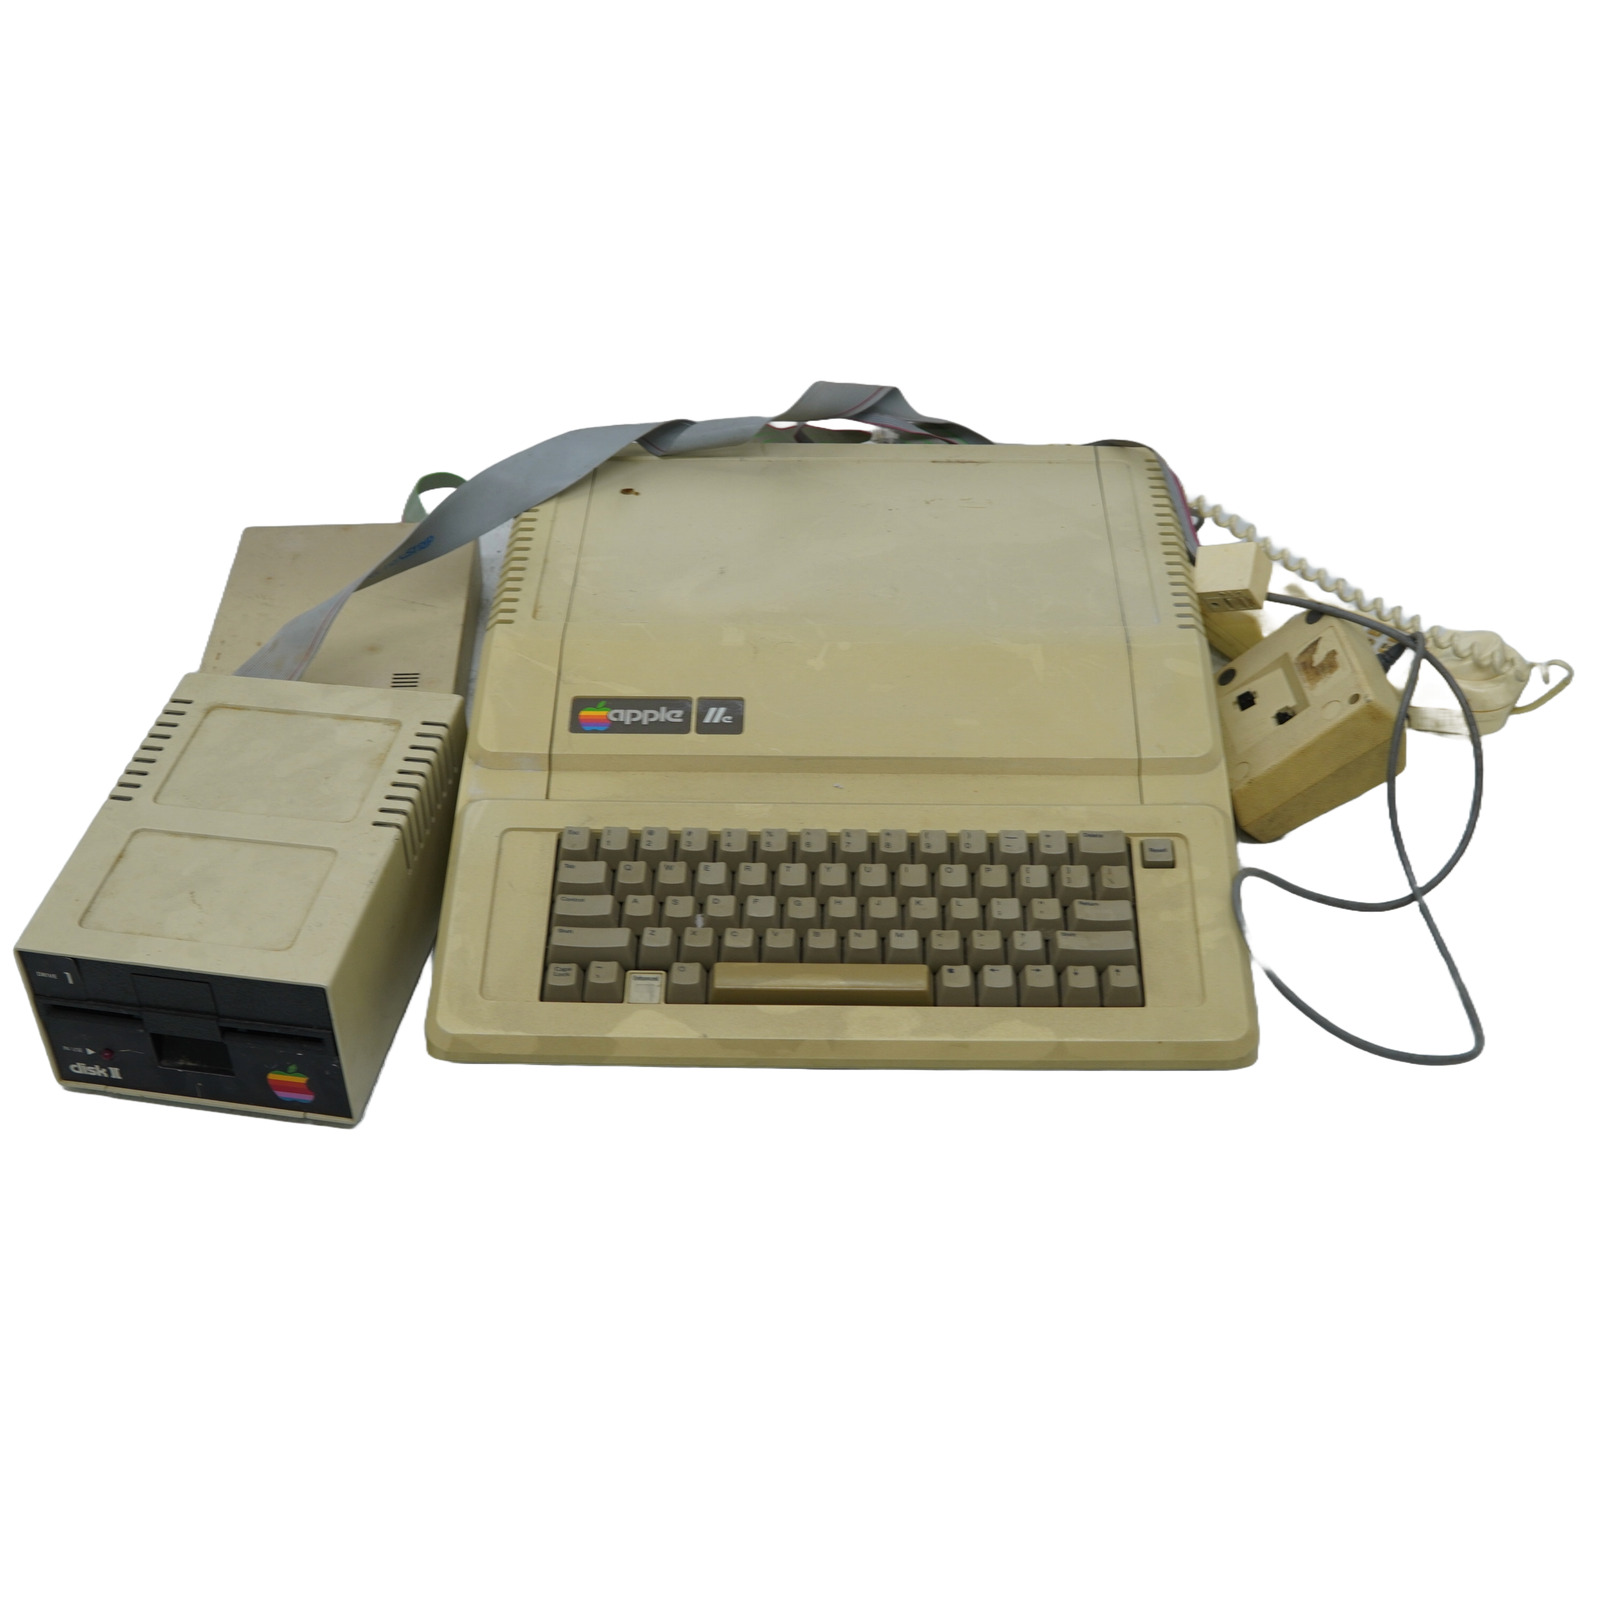 Apple IIe Vintage computer, Various add-ins